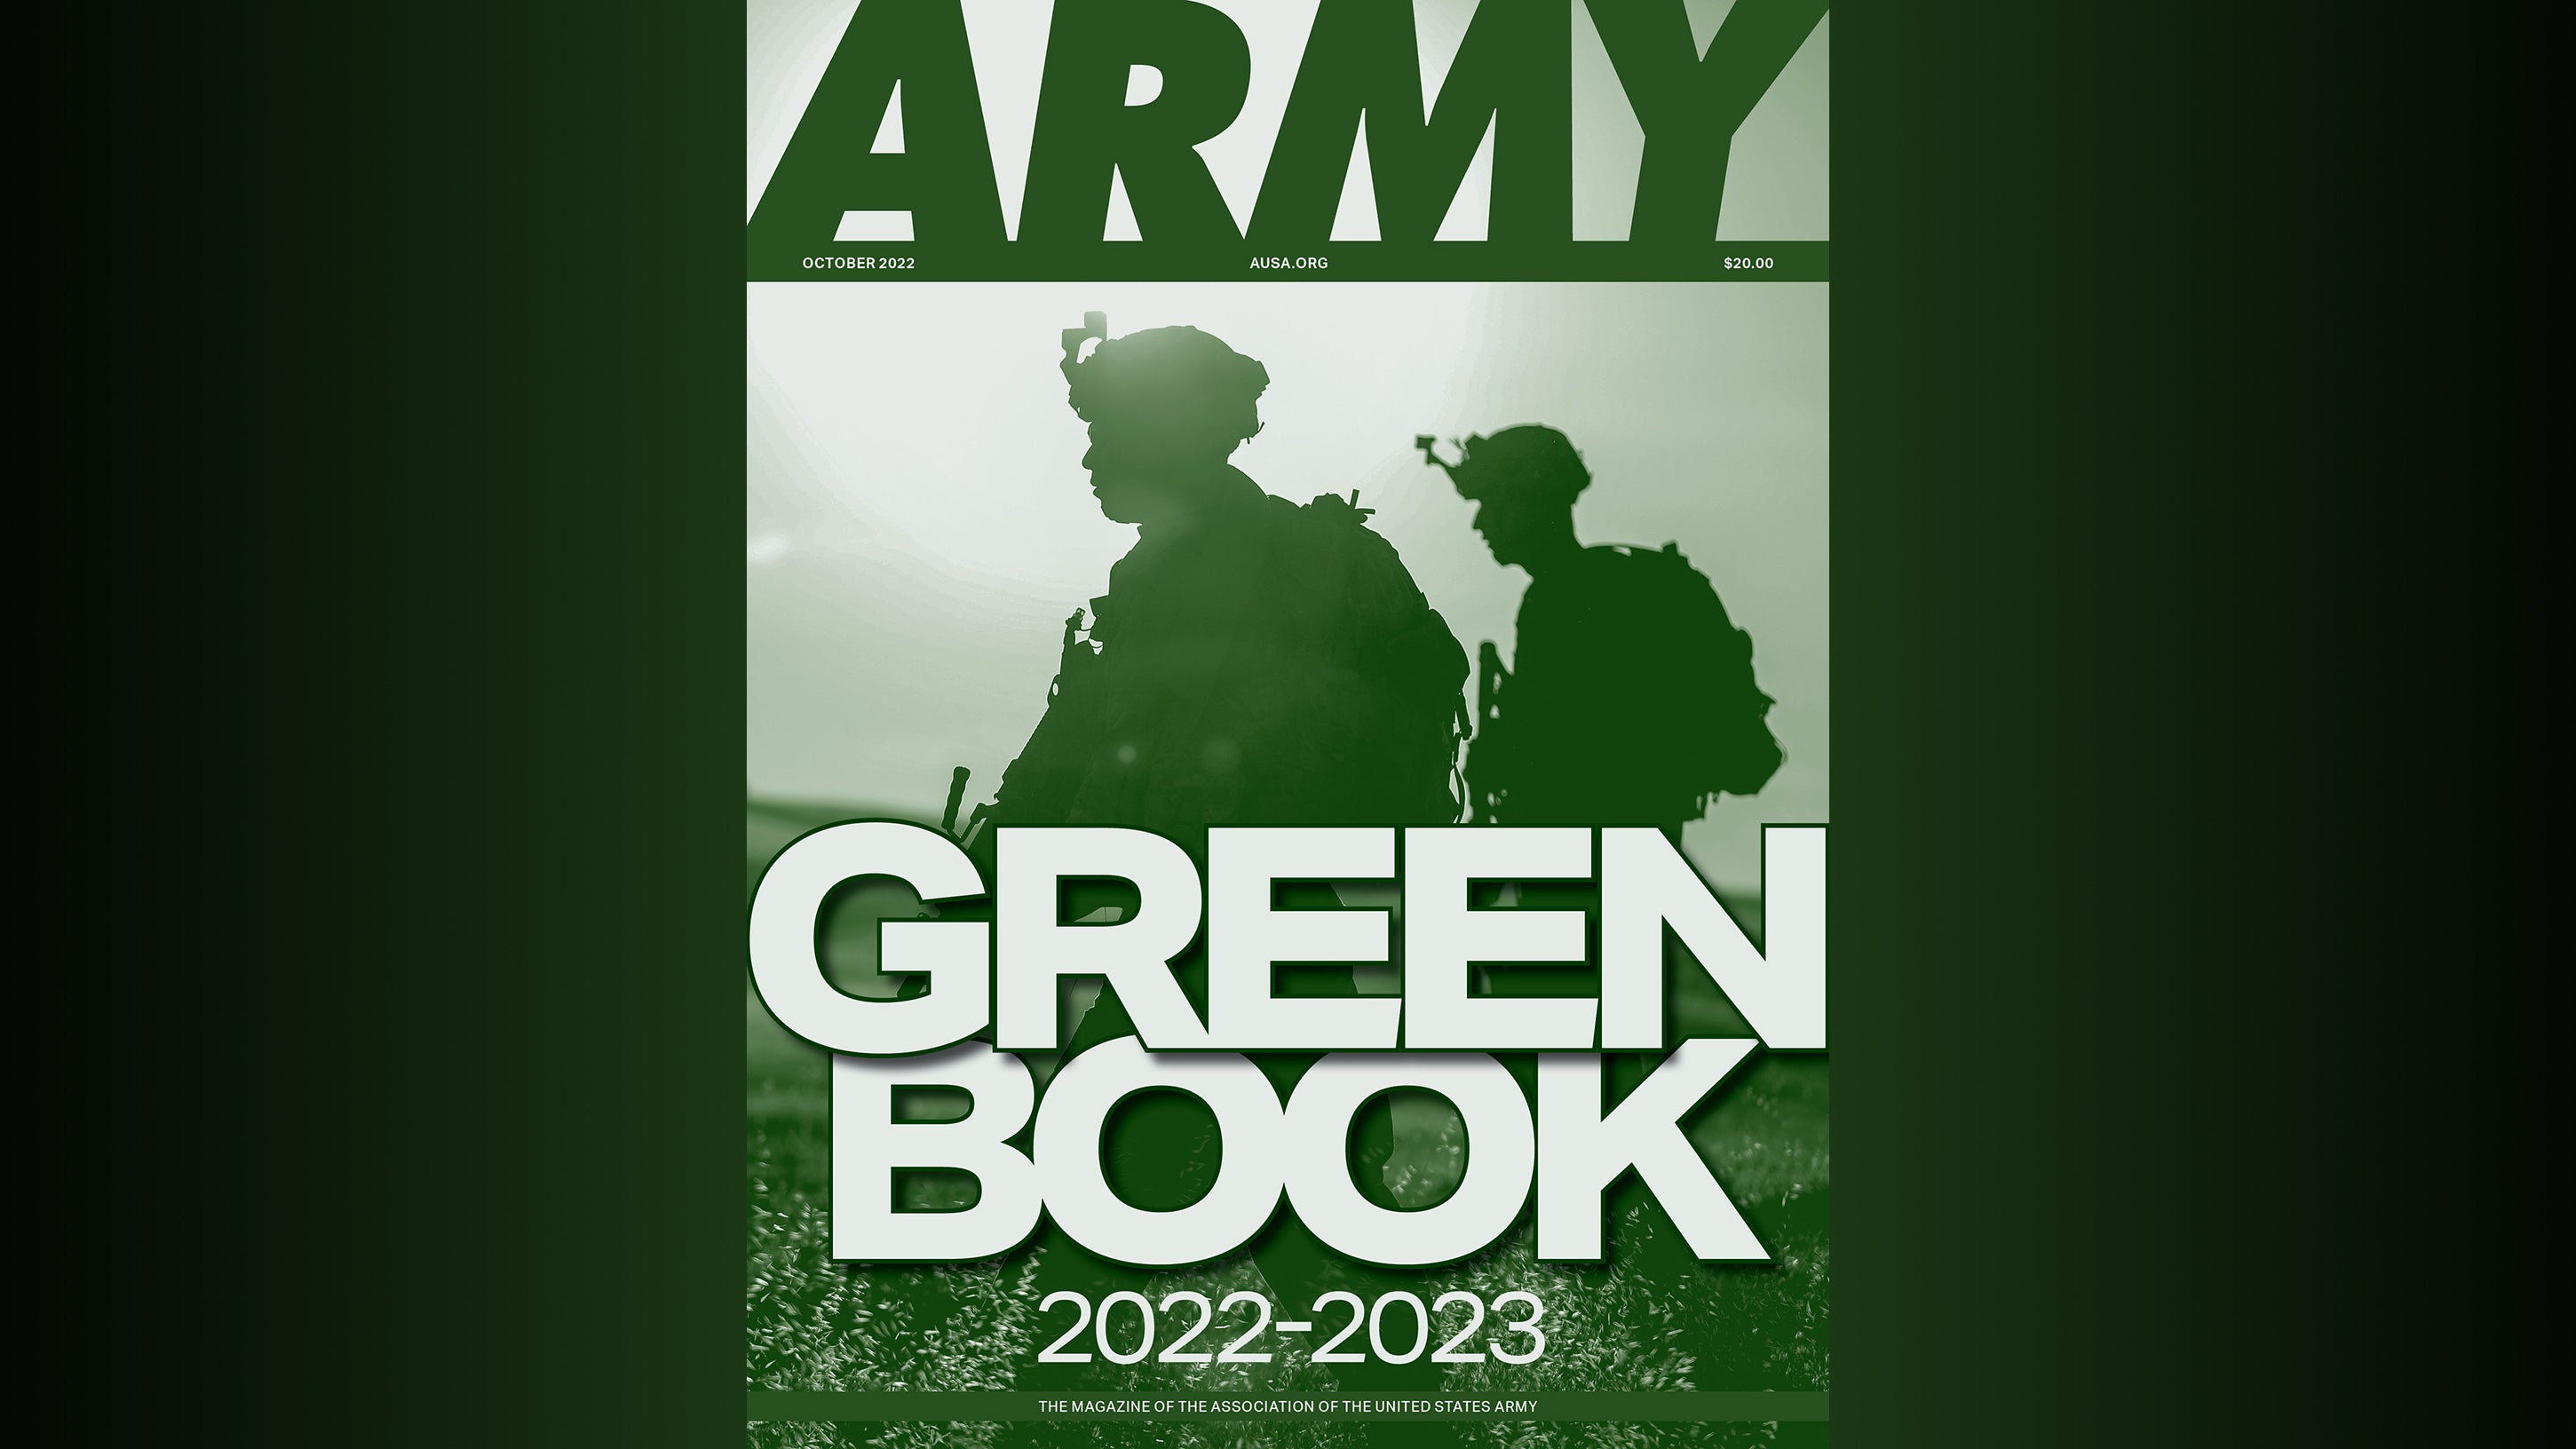 Green Book 2022-2023